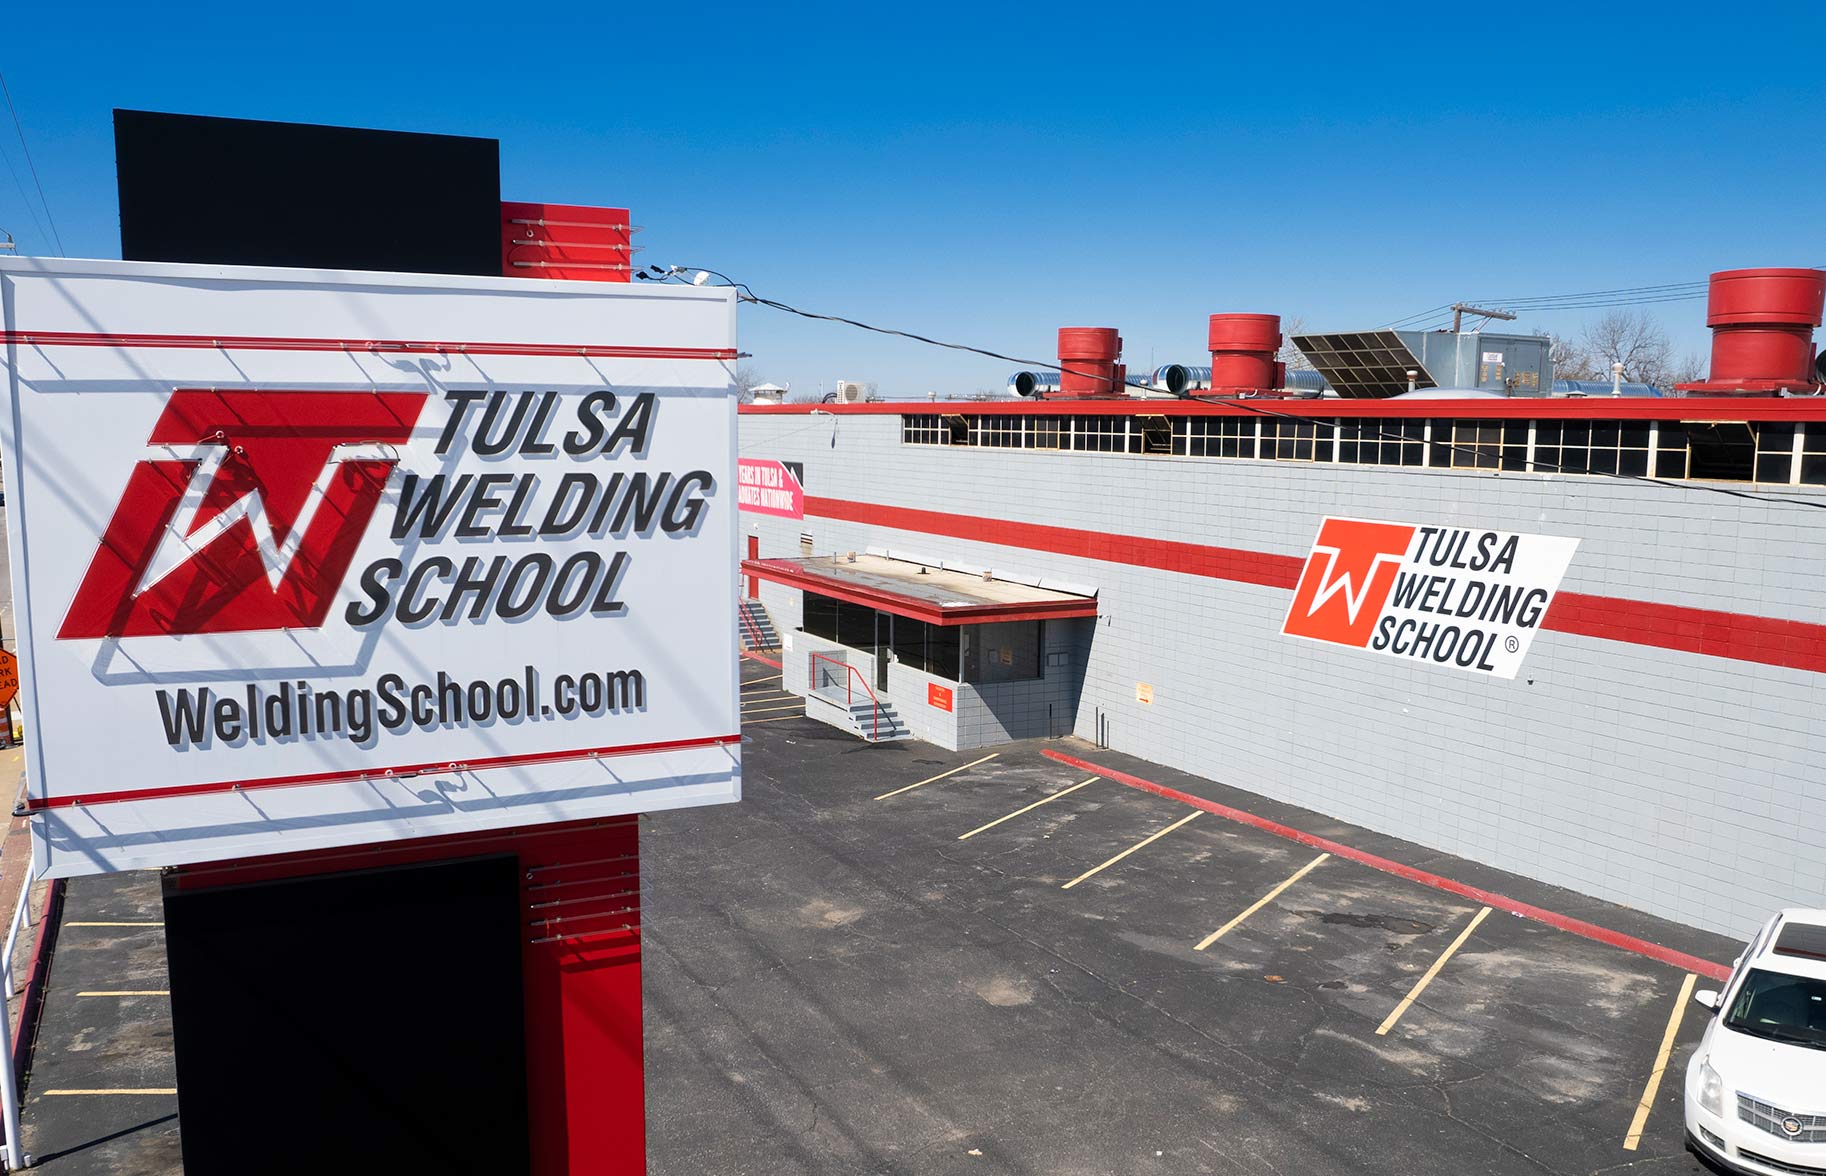 Aerial shot of Tulsa Welding School campus building and sign in Tulsa, OK